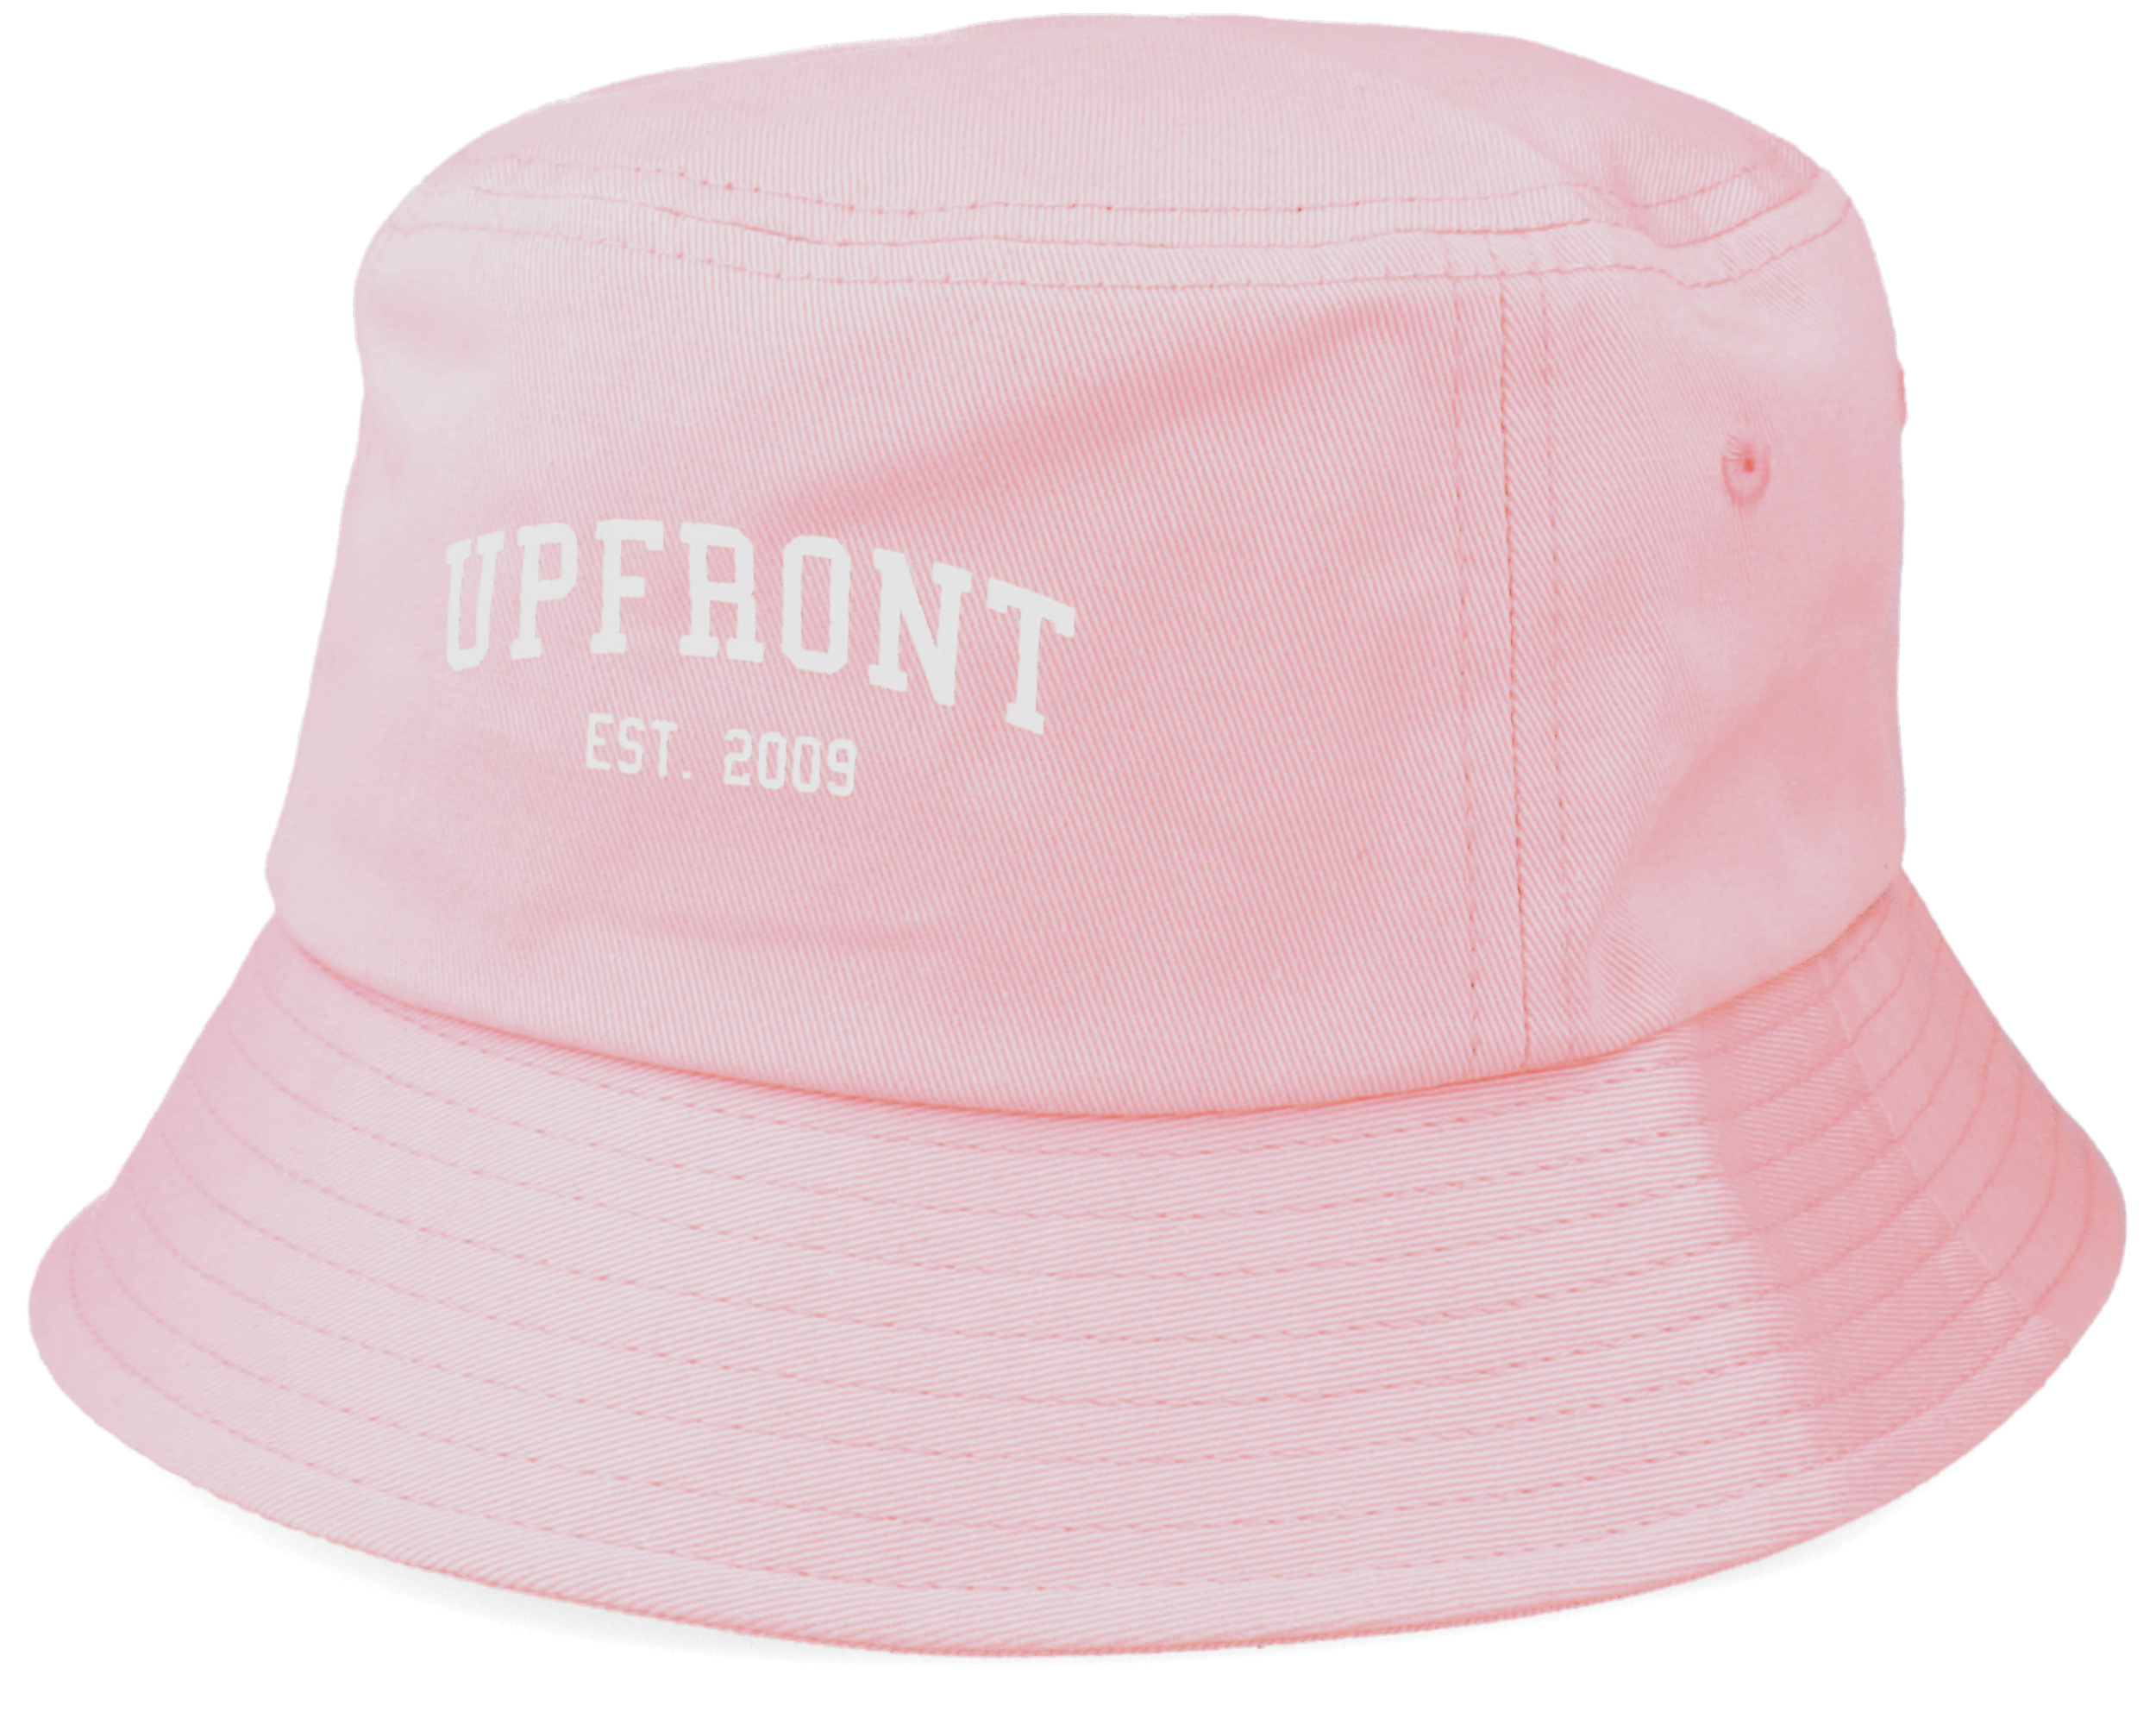 Kids High Youth Hat Light Pink Bucket - Upfront hats | Hatstore.co.uk